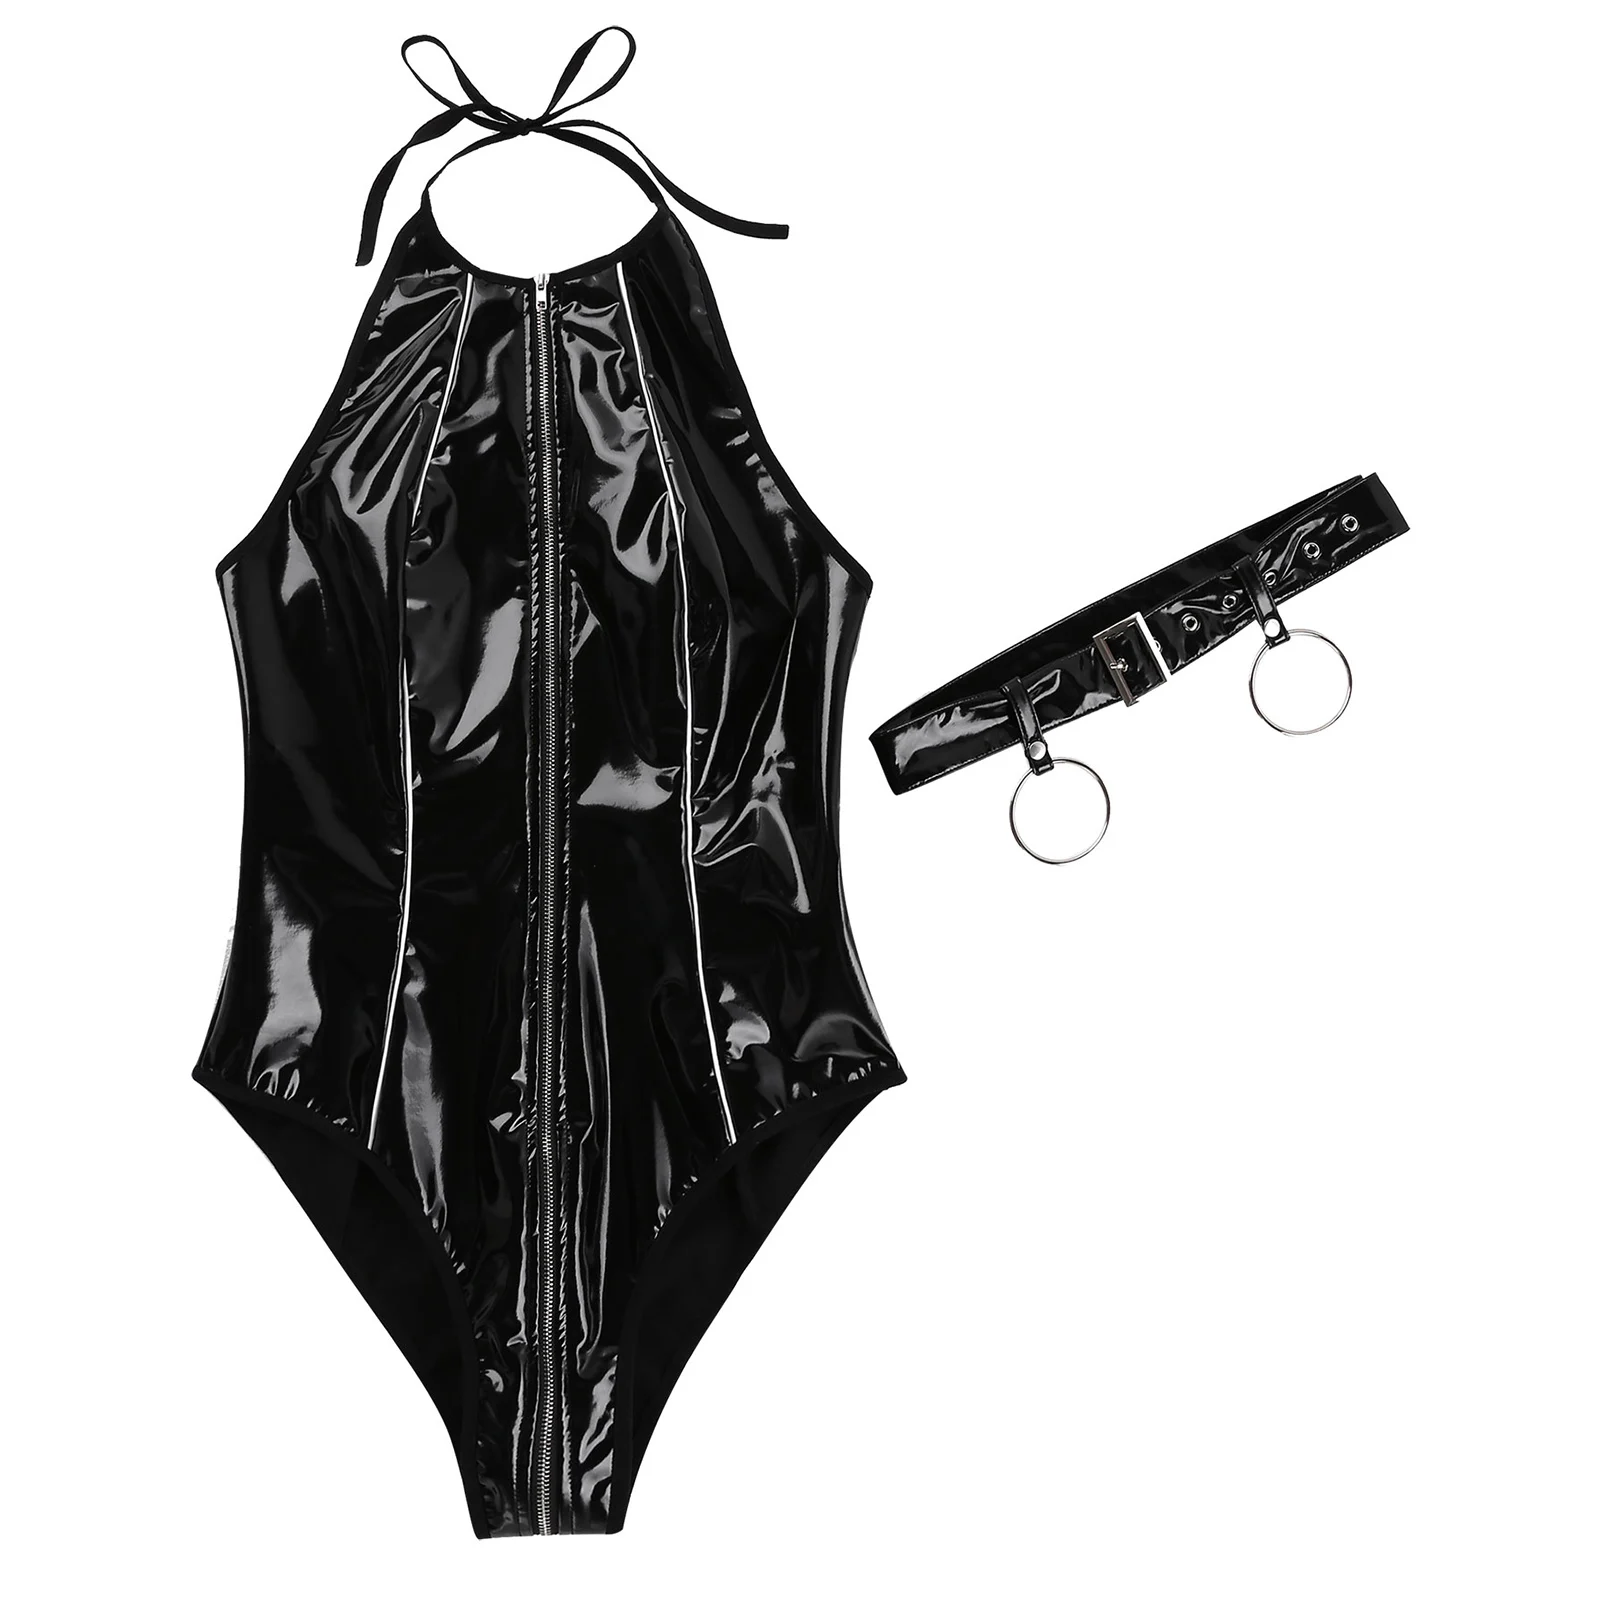 Dámske plavky s uväzovaním za Krajky-up Trikot Backless Catsuit s Nastaviteľným Pásom Bielizeň Punk lakovanej Kože Kombinézu Rave Kostým Oblečenie